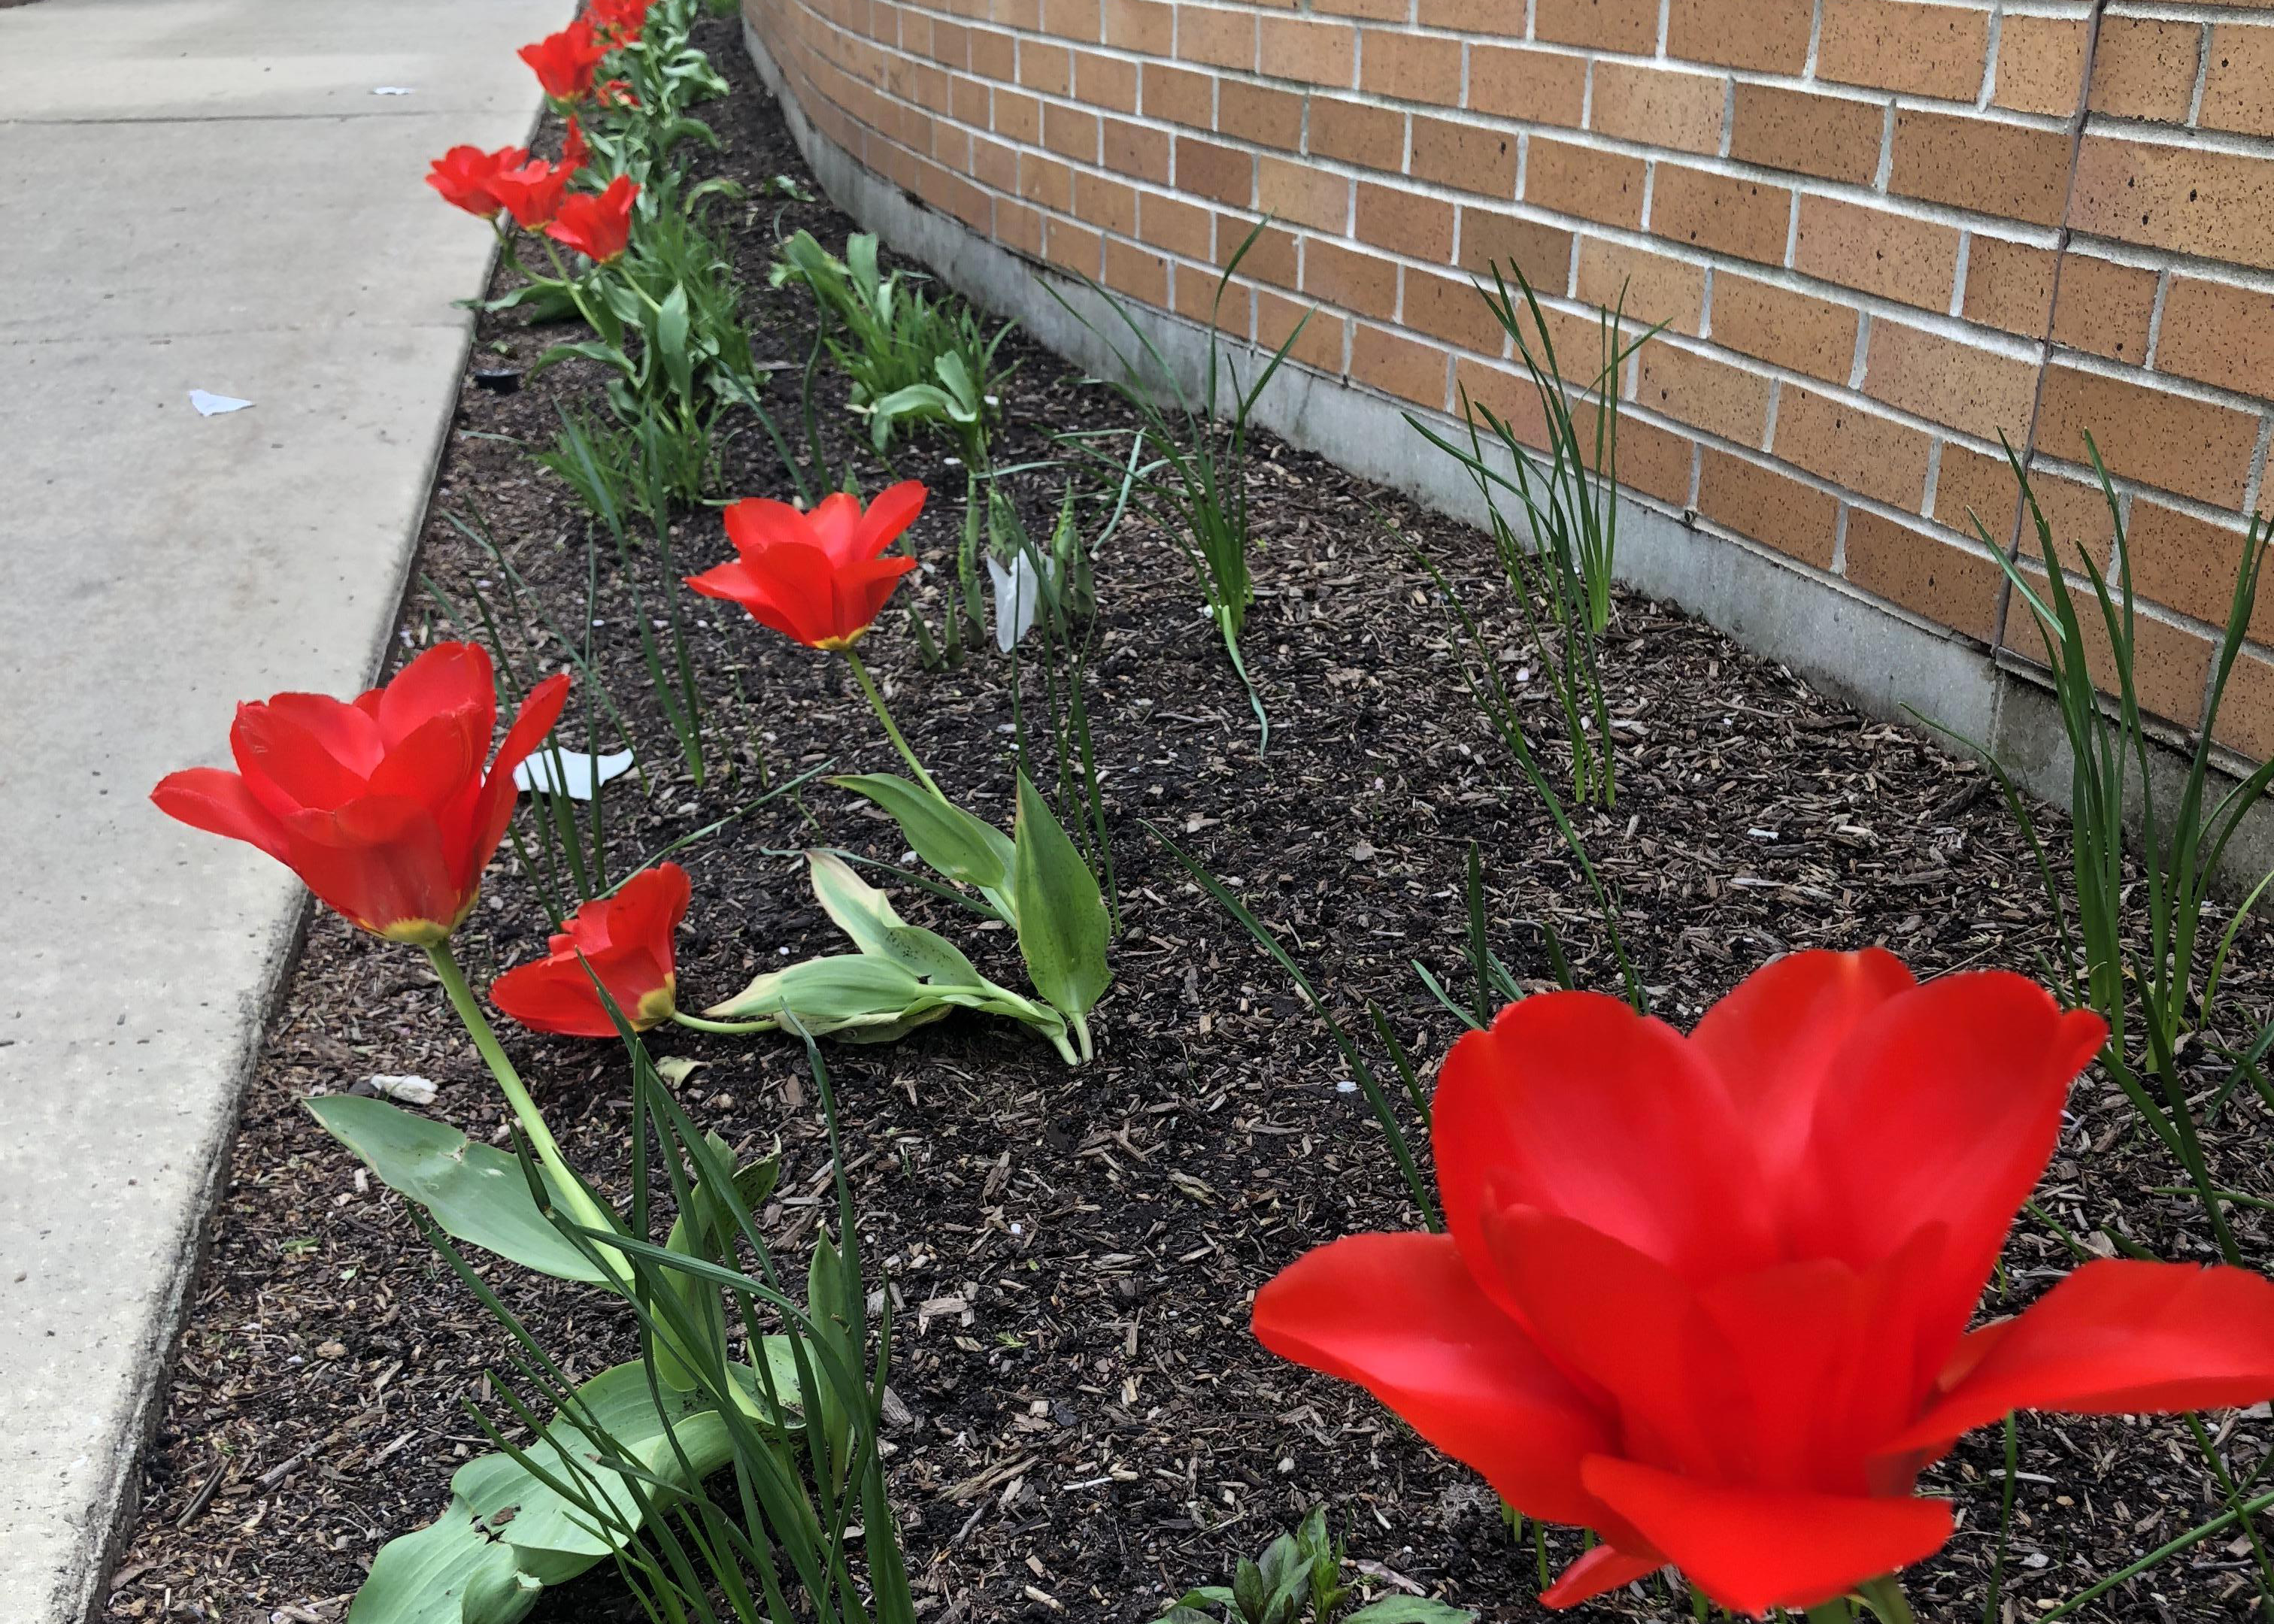 Tulips blooming next to sidewalk.